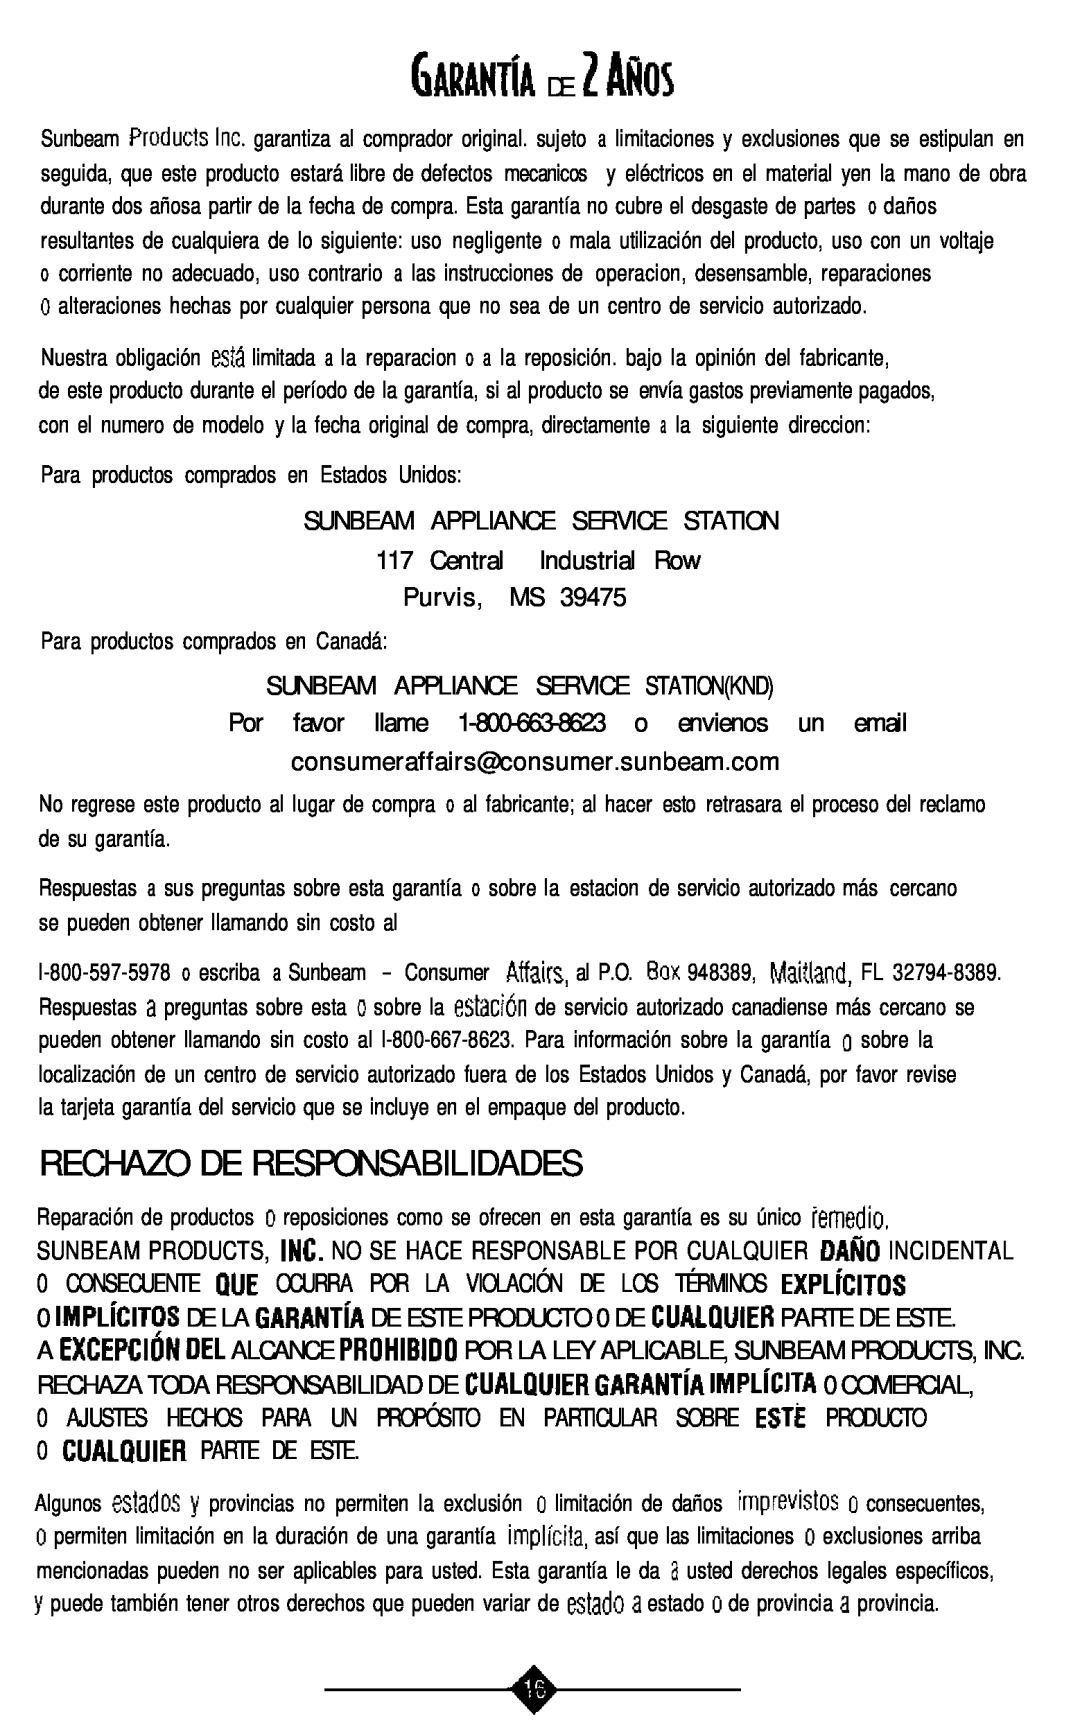 Sunbeam 6203 GARANTÍA DE Z ANos, Rechazo De Responsabilidades, Sunbeam Appliance Service Station, Cualouier Parte De Este 